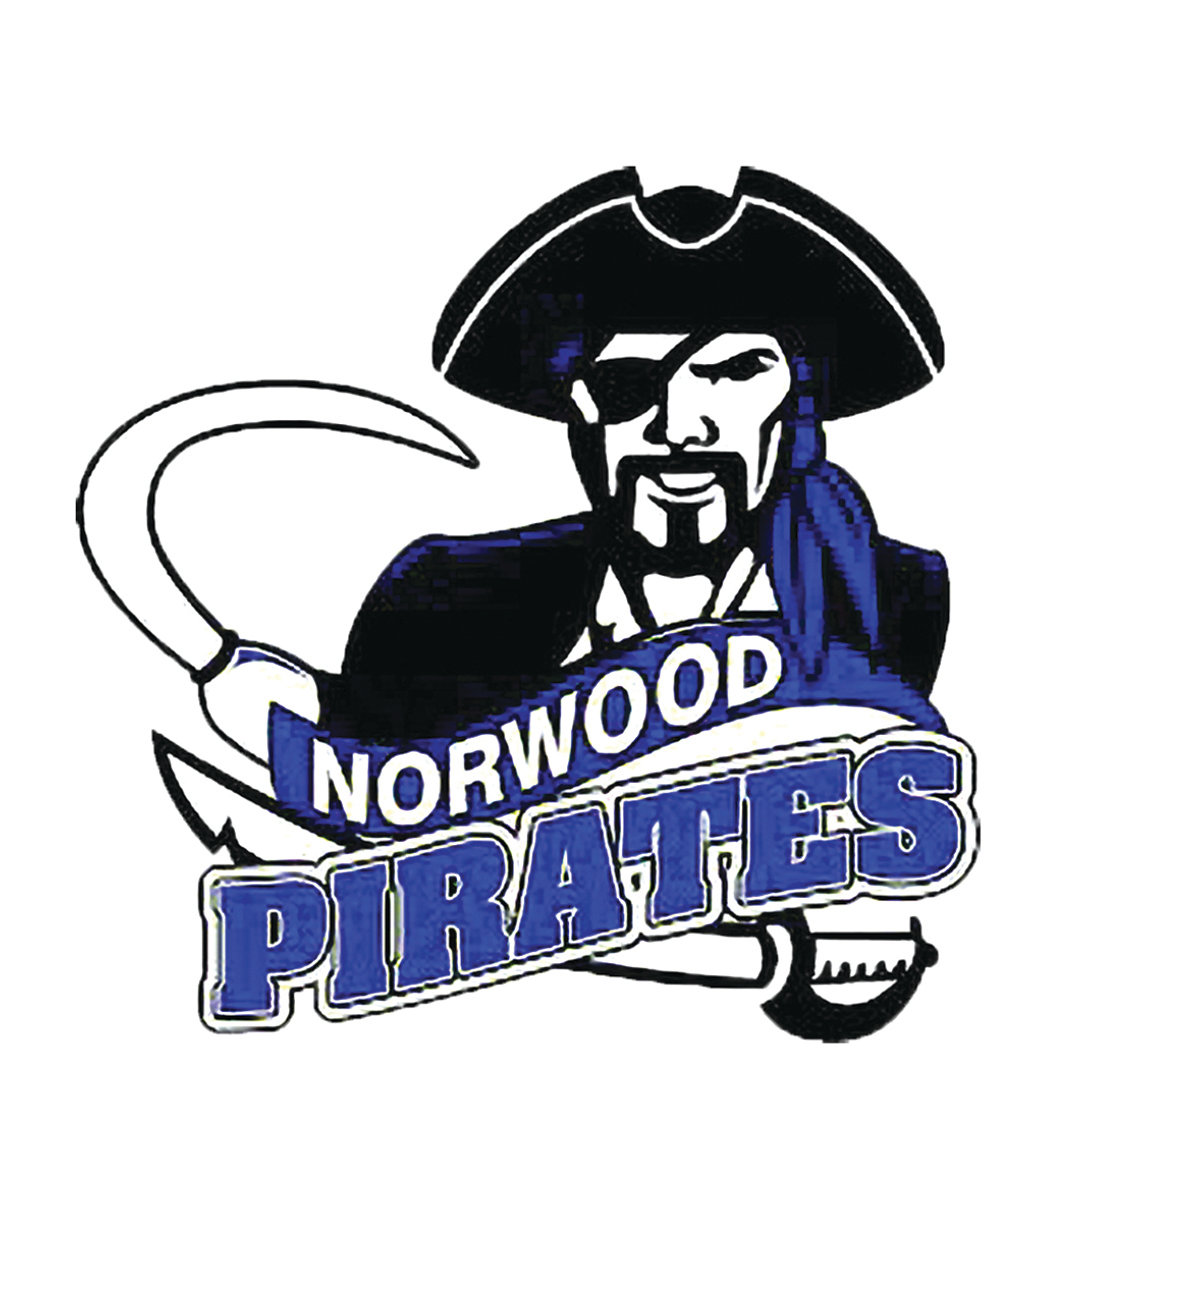 Norwood Pirates logo